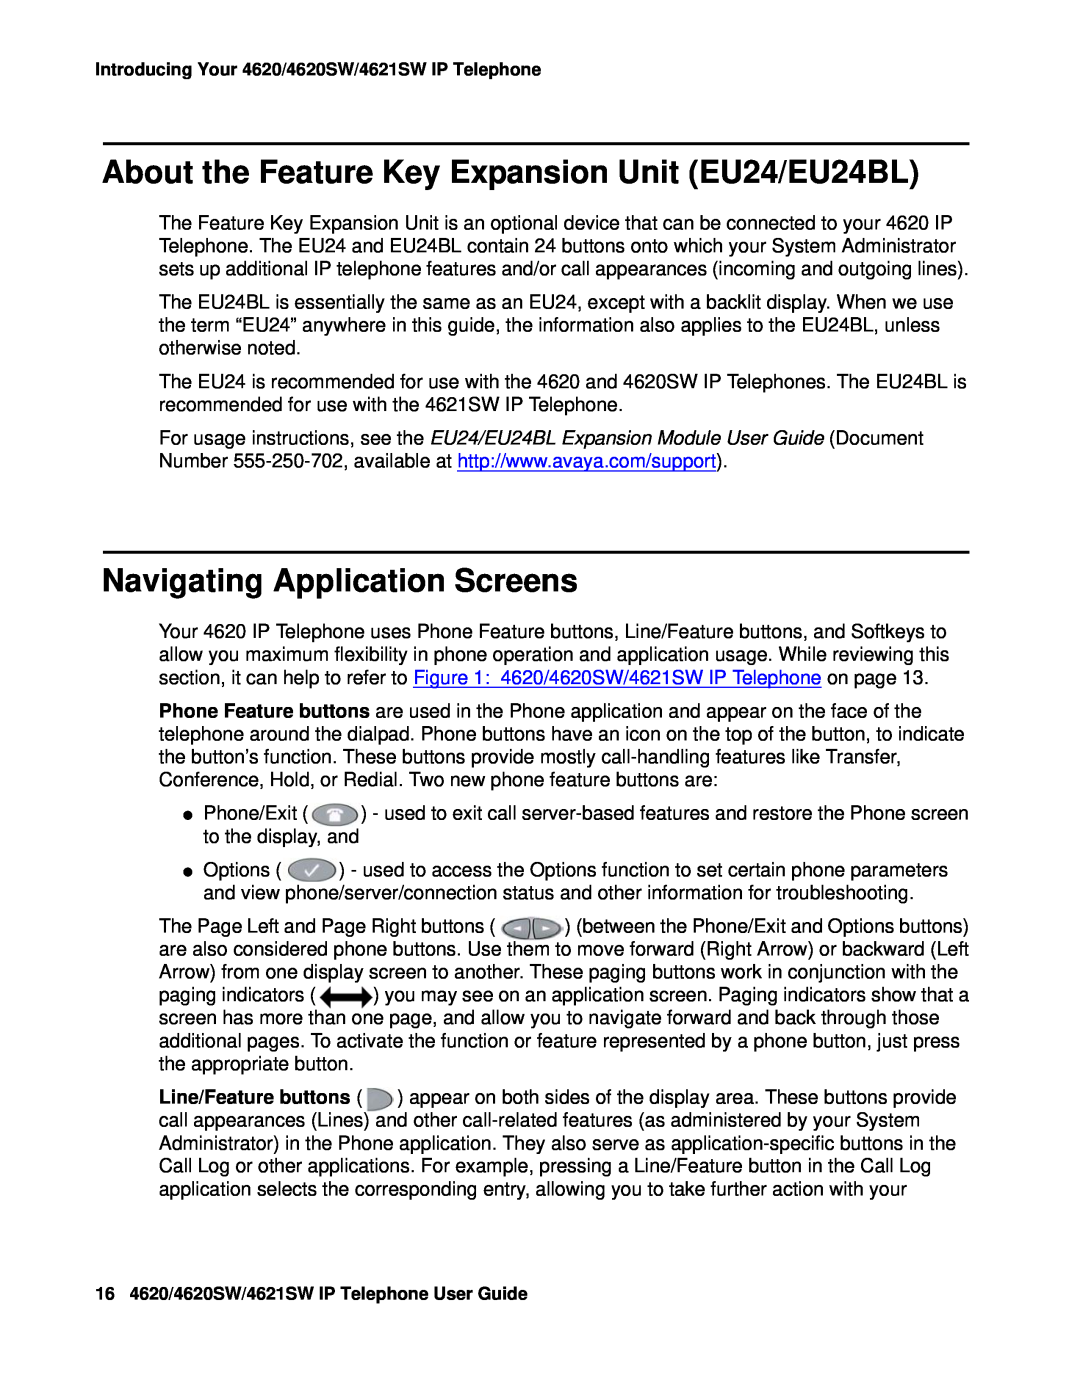 Avaya 4620SW, 4621SW manual About the Feature Key Expansion Unit EU24/EU24BL, Navigating Application Screens 